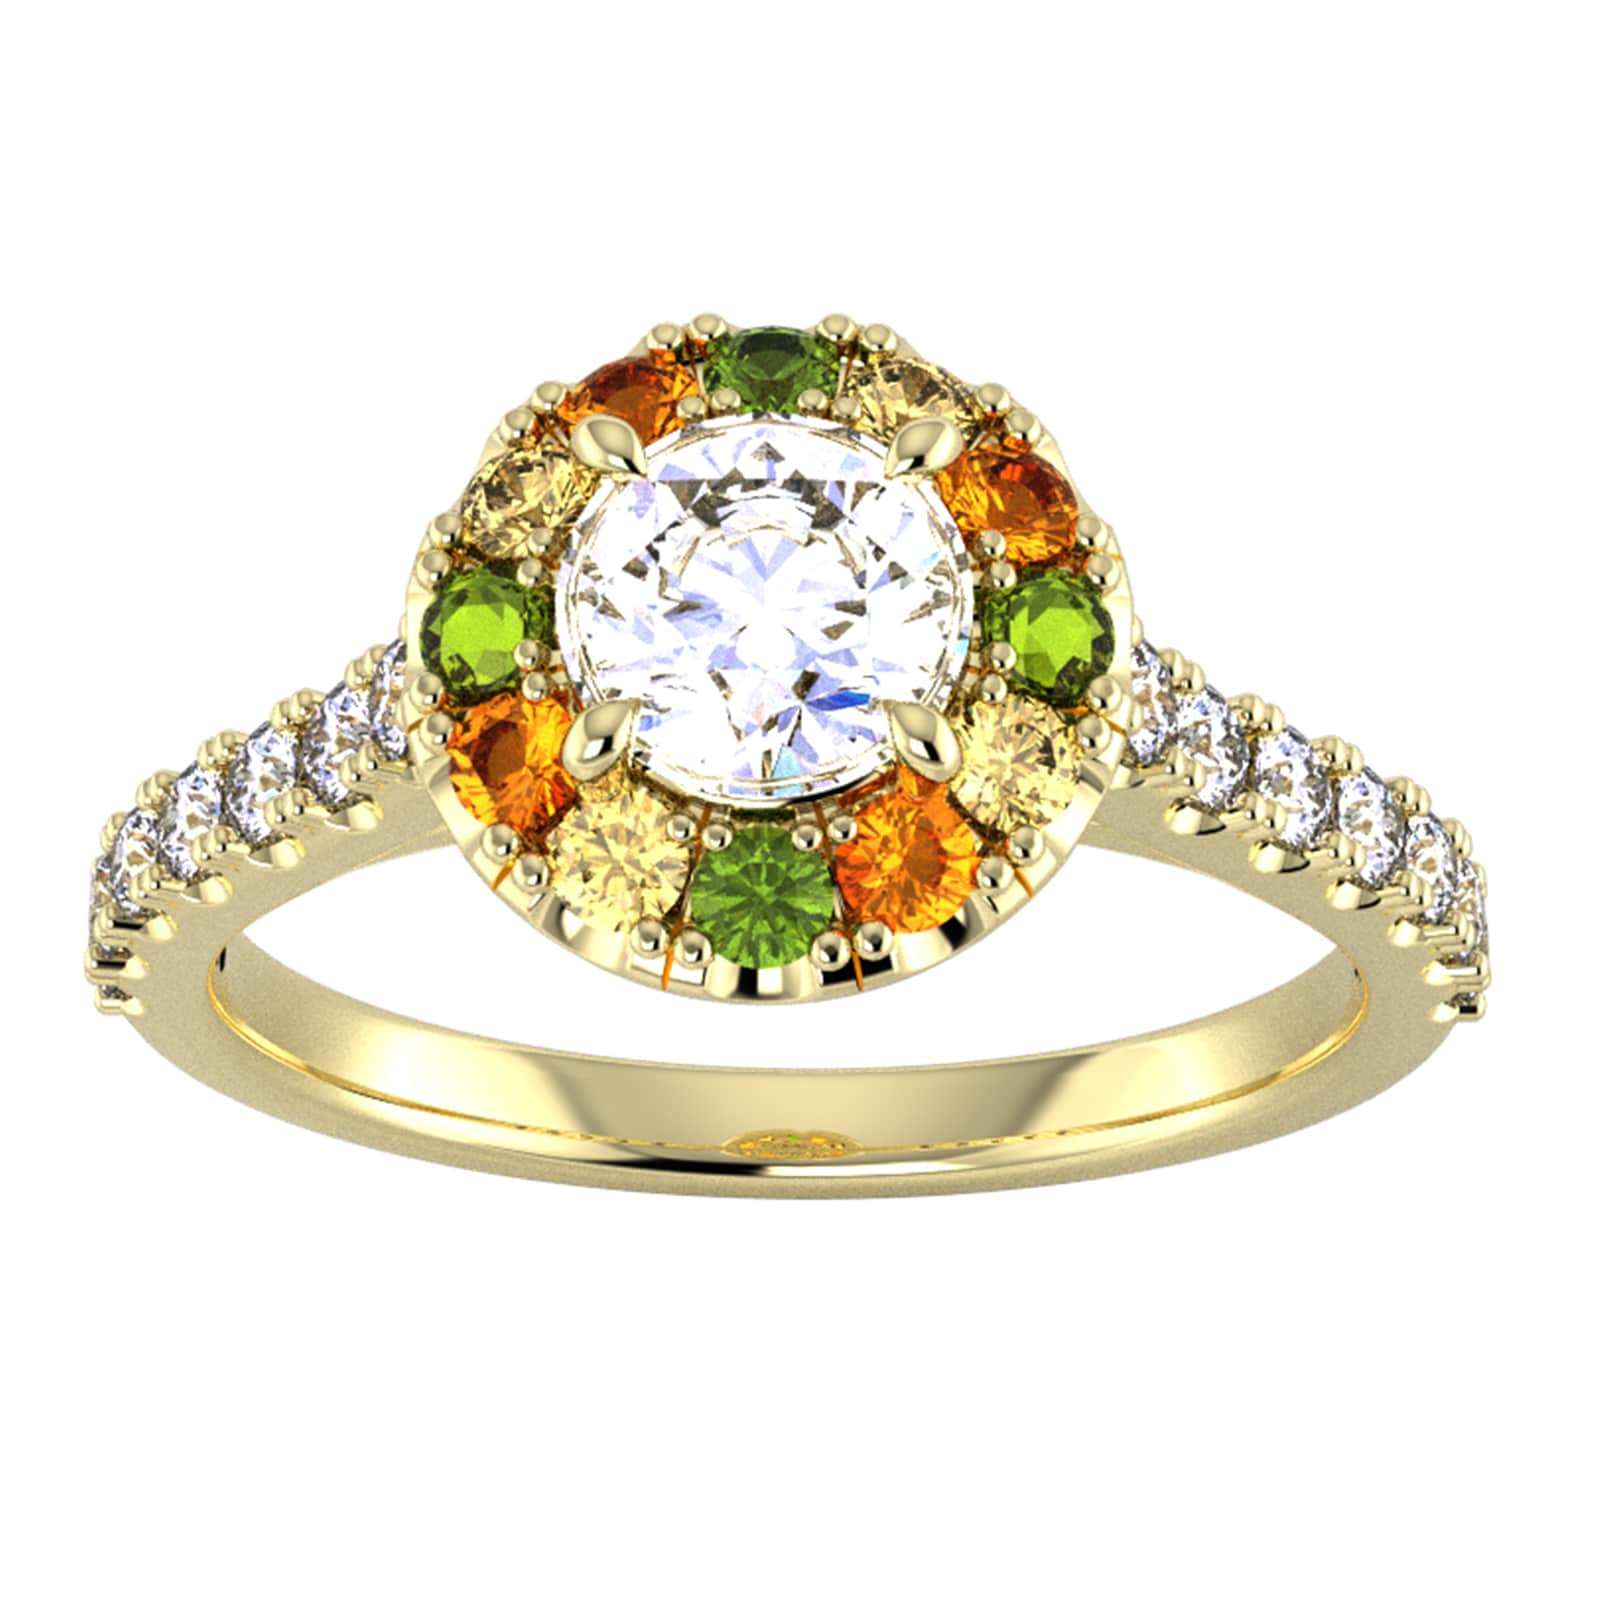 9ct Yellow Gold Diamond & Yellow, Orange, Green Sapphire Halo Ring - Ring Size T.5